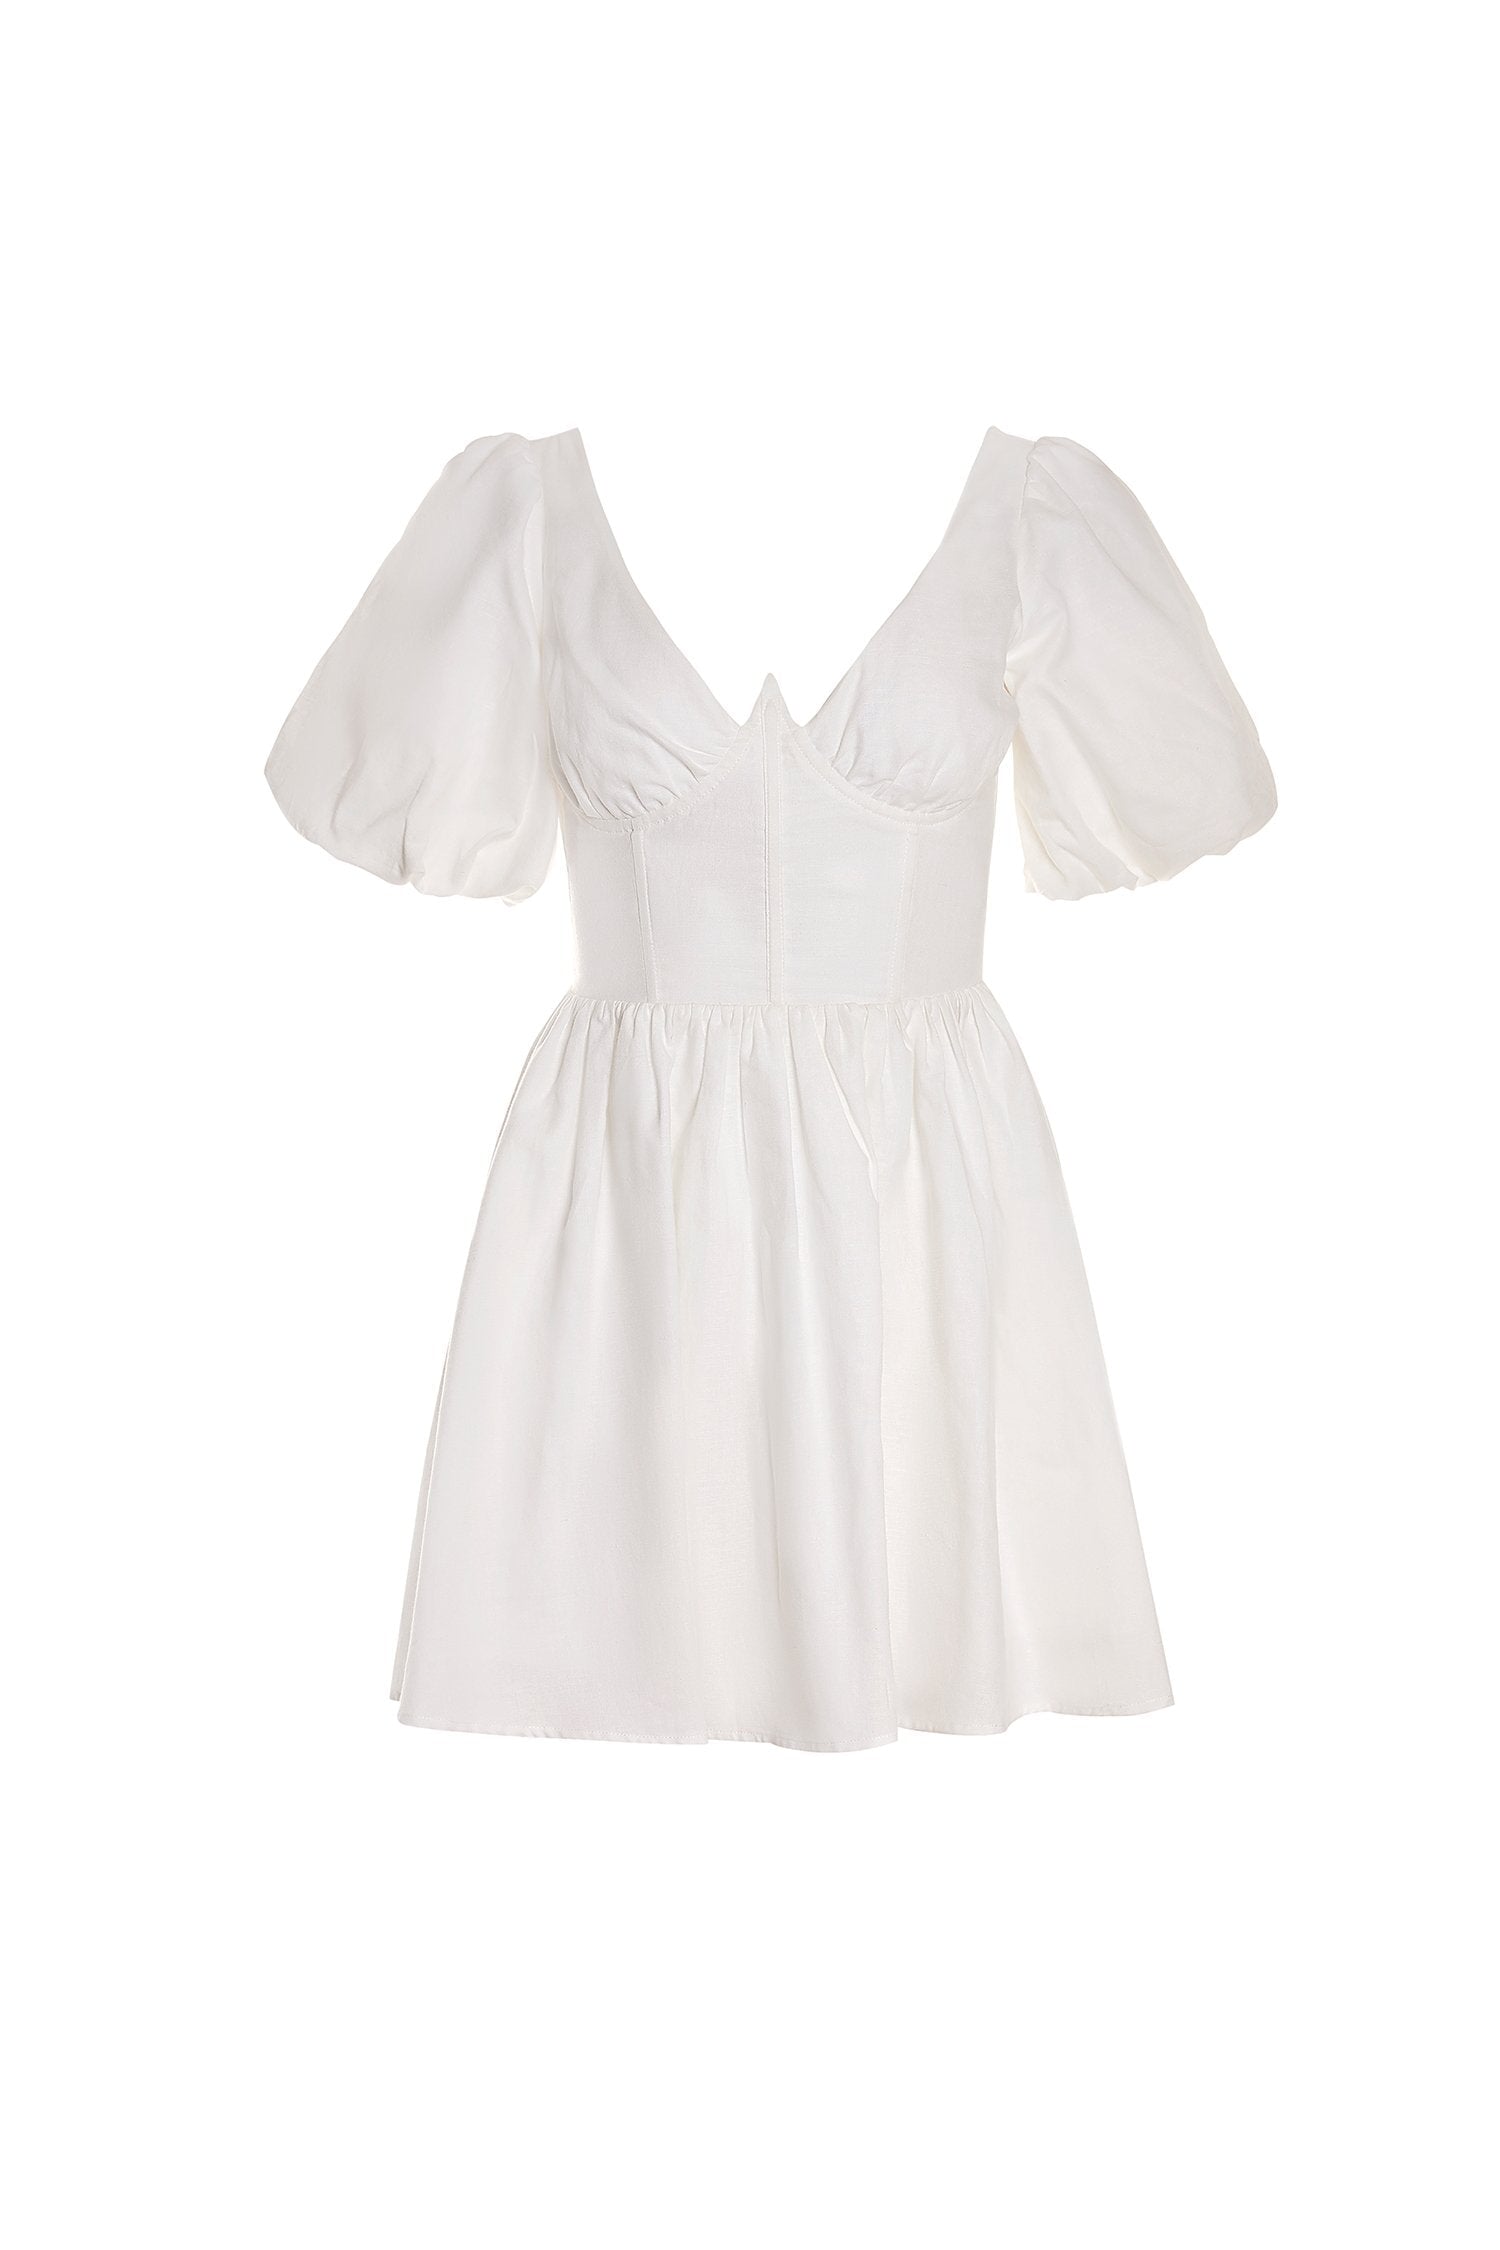 Adah White Mini Linen Dress | Afterpay | Zip Pay | Sezzle